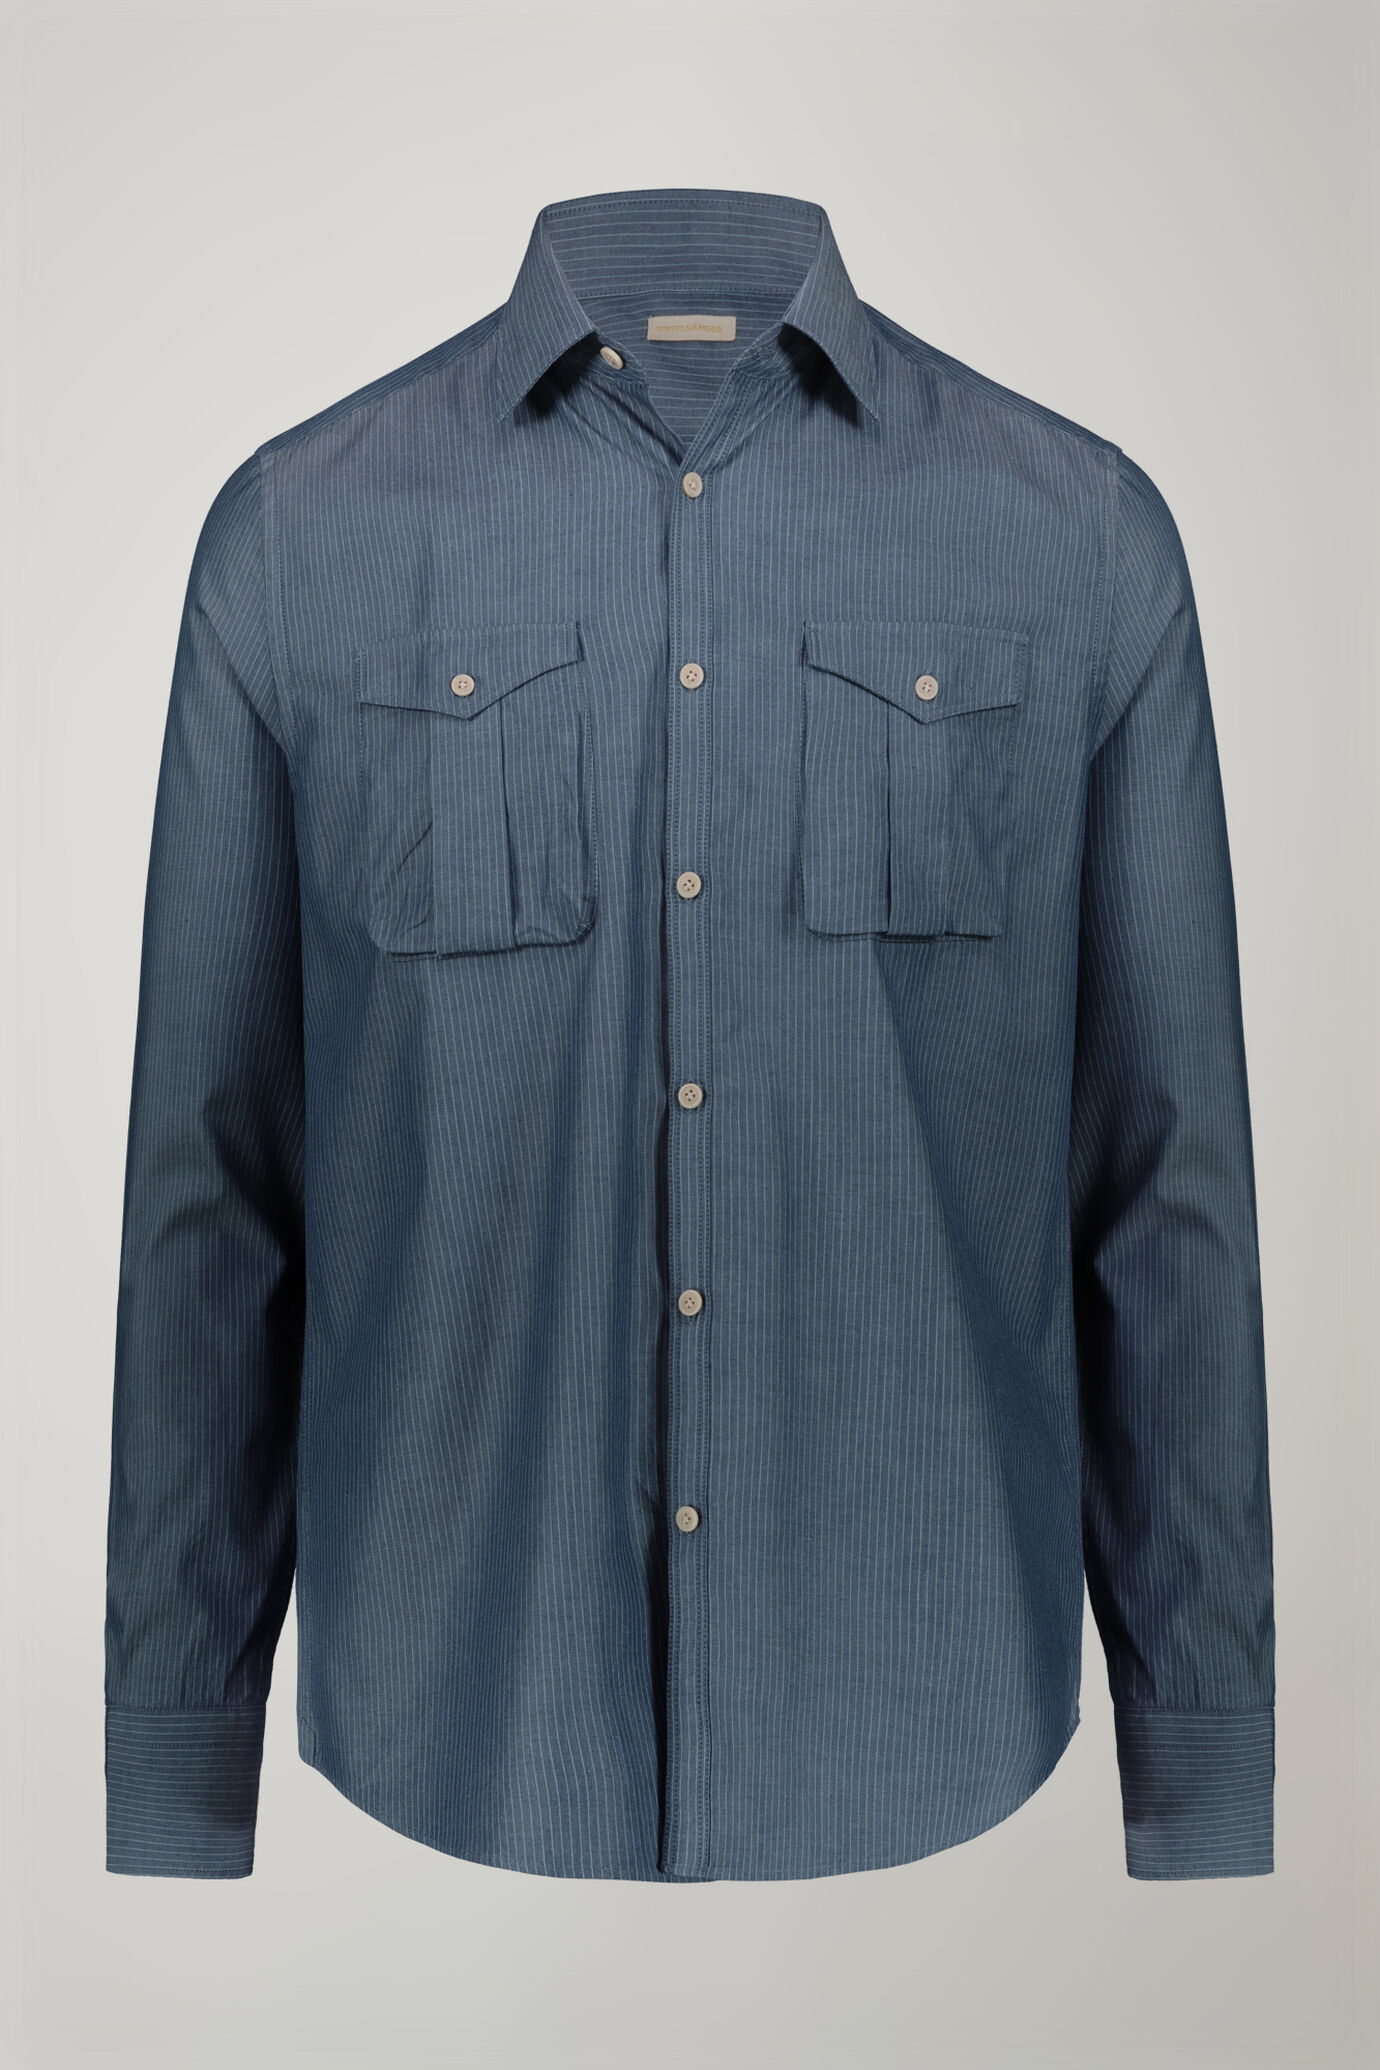 Camicia casual uomo collo classico 100% cotone tessuto gessato in denim comfort fit image number 5